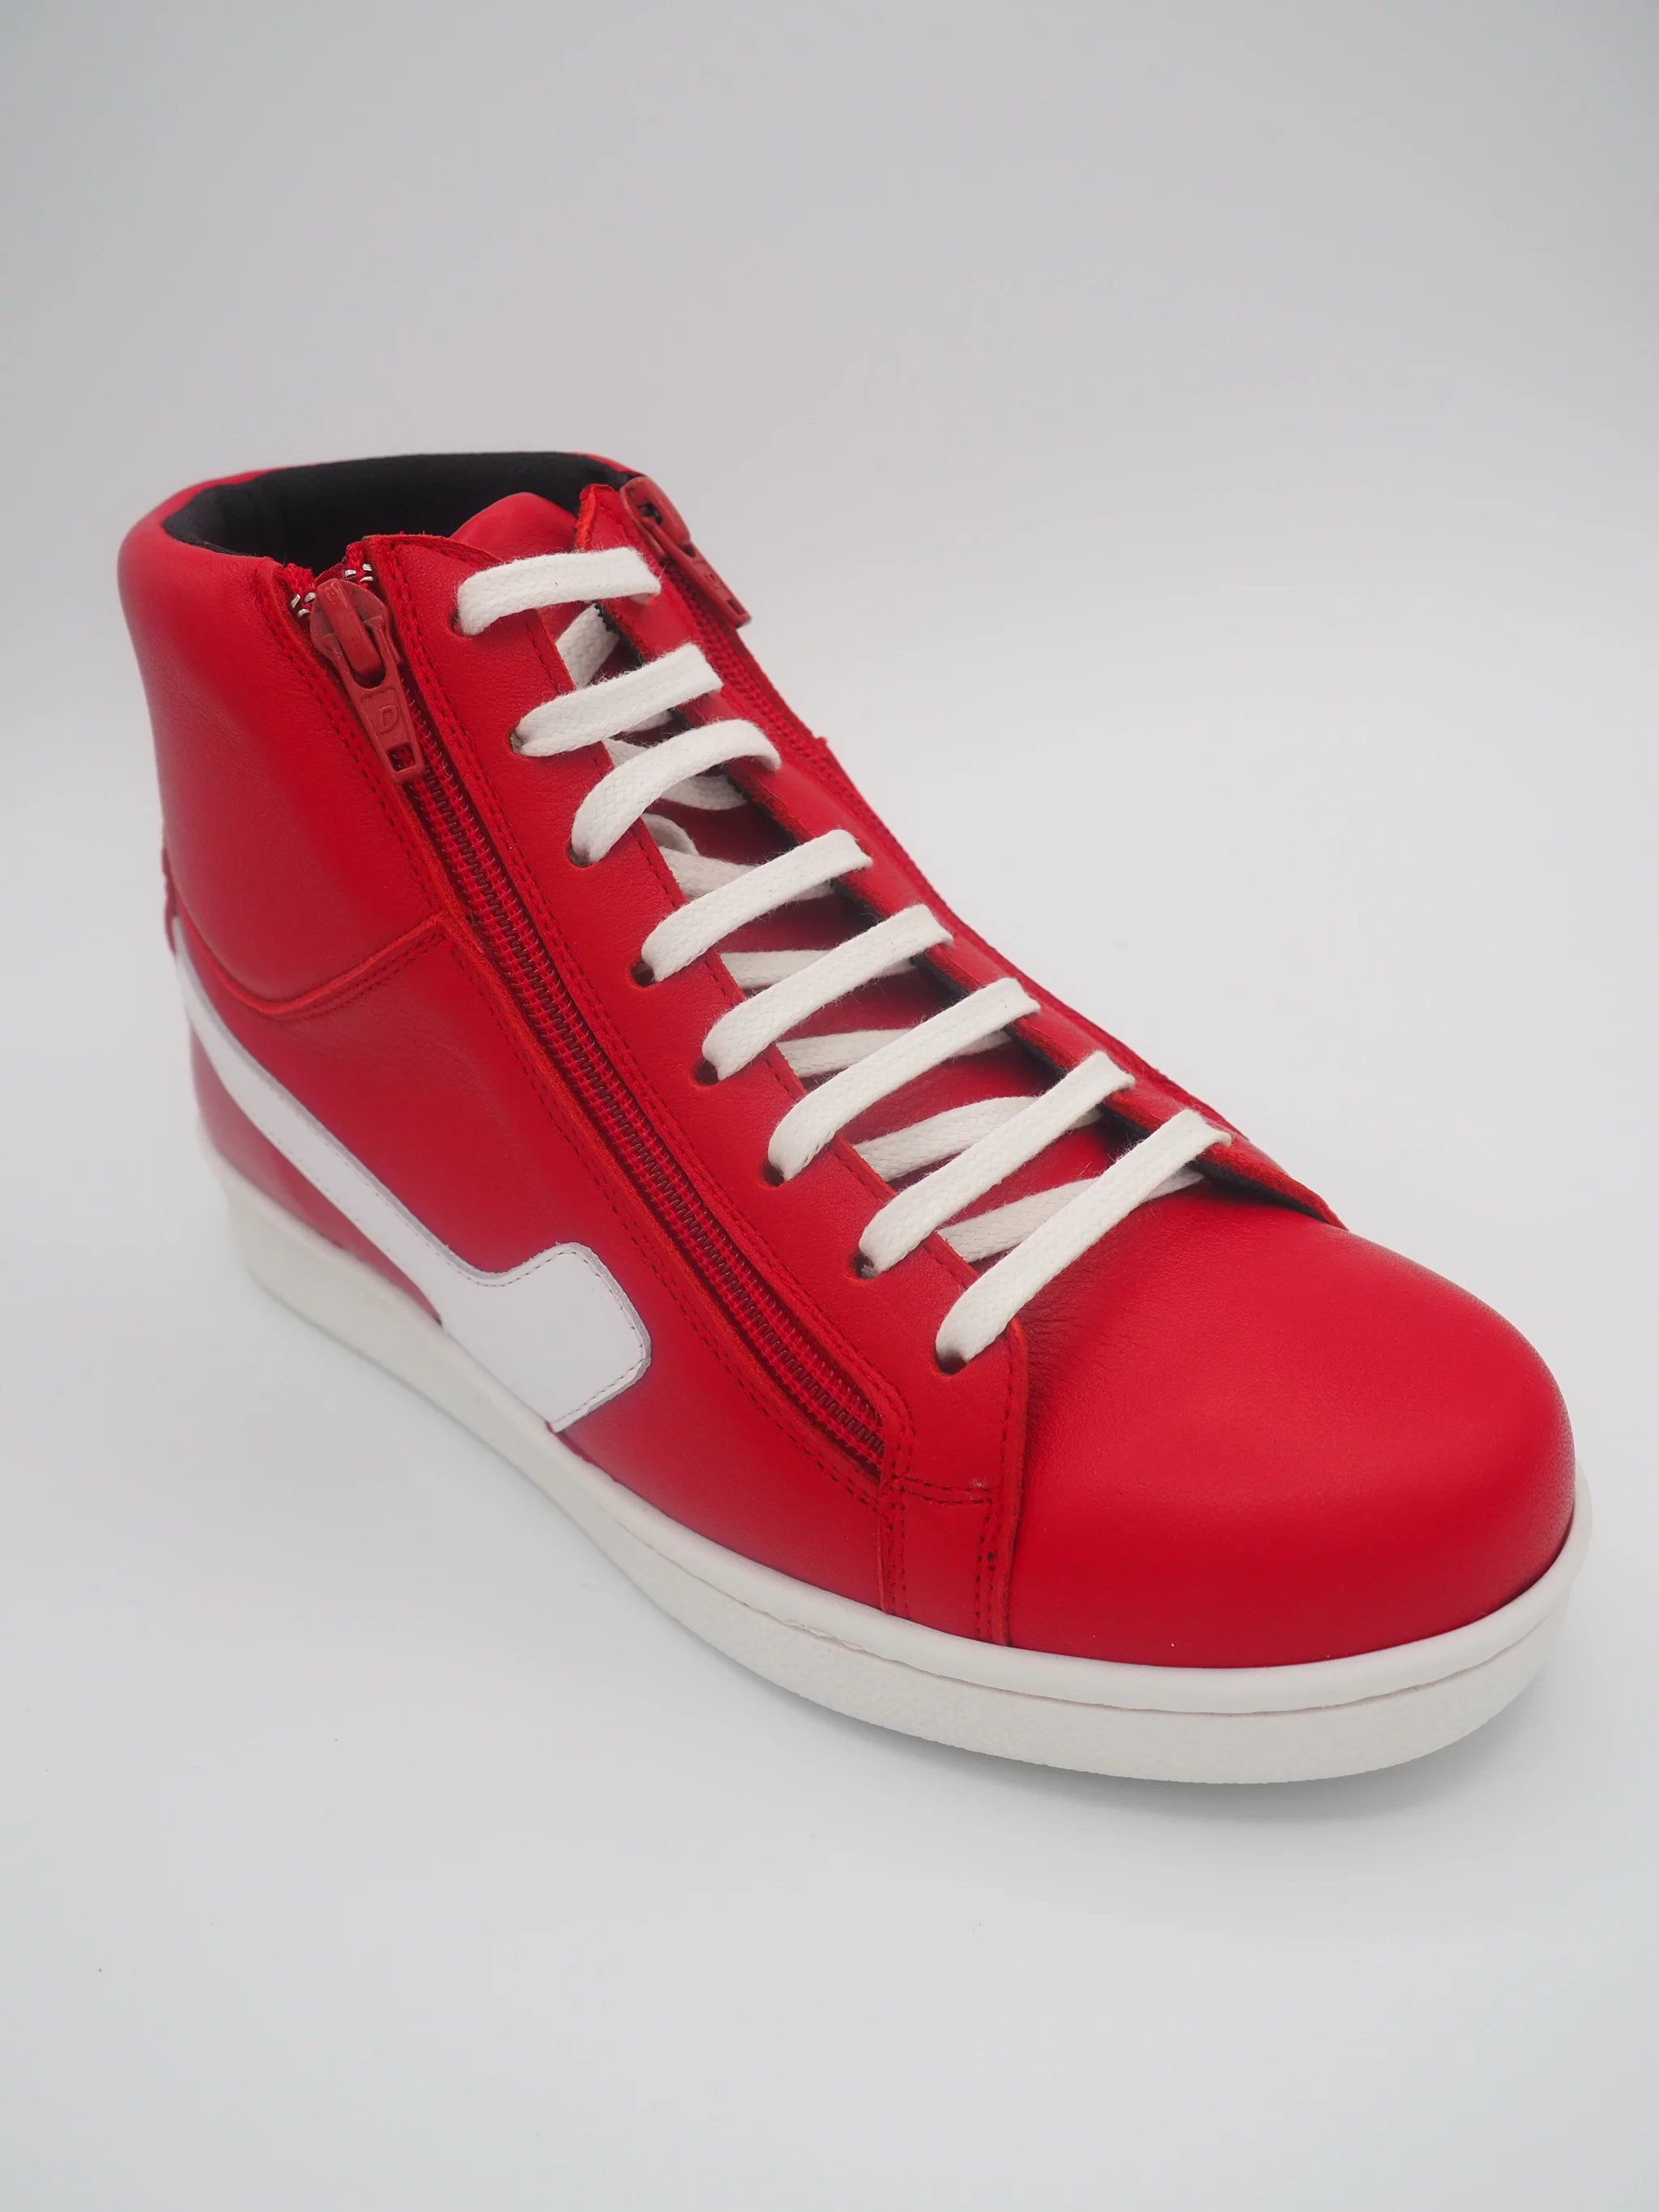 Modelo rojo – Albertys Shoes